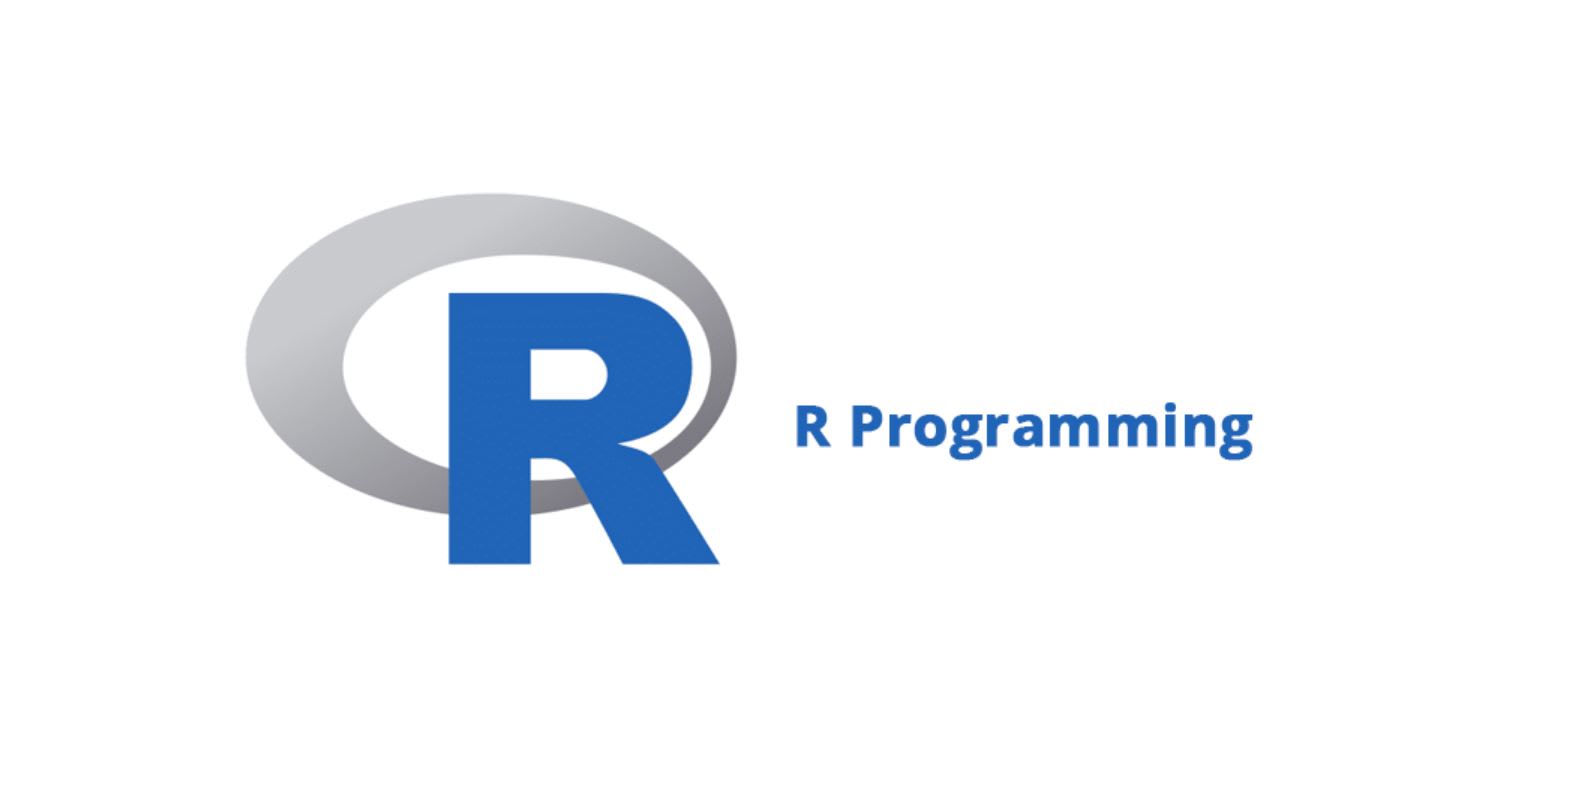 Introduction to R programming language